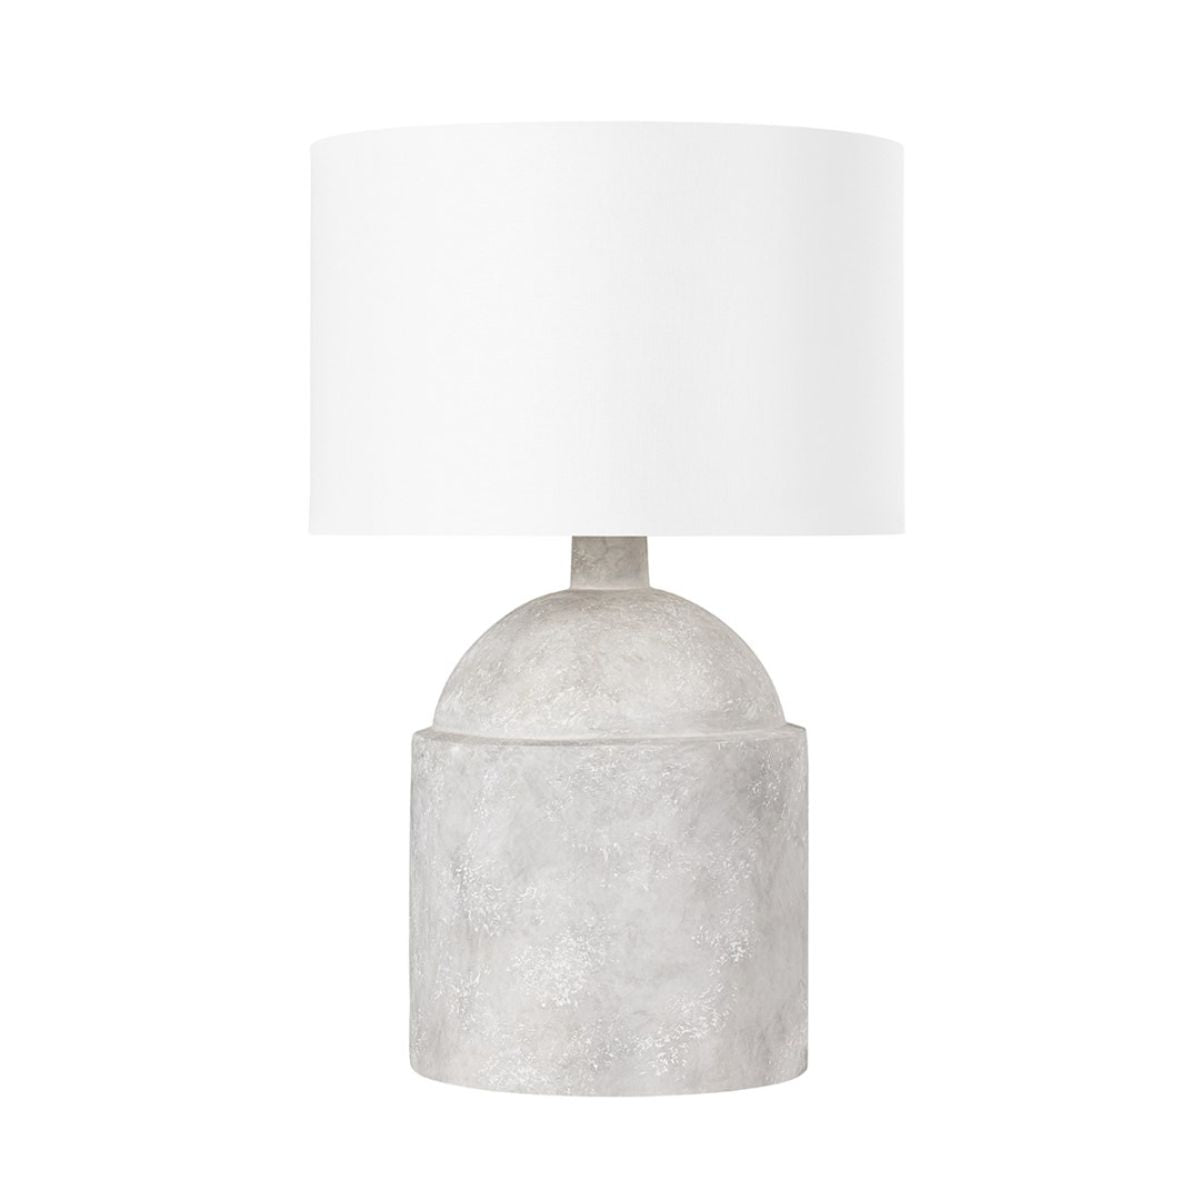 Torrance Table Lamp Ceramic Weathered Grey Finish